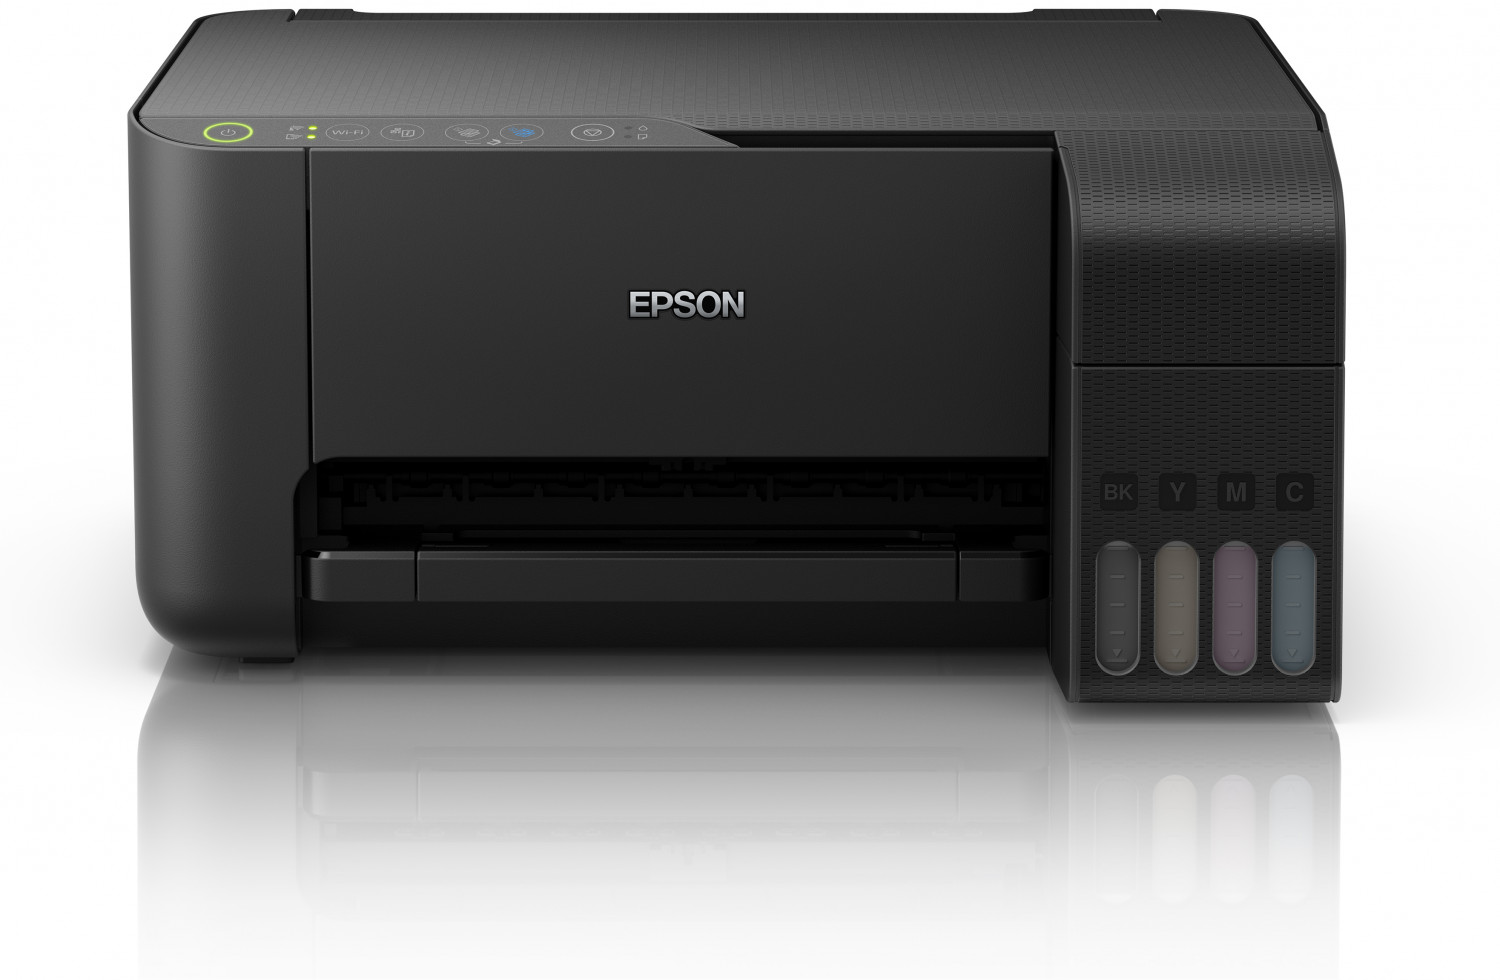 Printer Epson ET-2710/ET-2711/ET-2714 Installation in Ubuntu 22.04 – Step-by-step